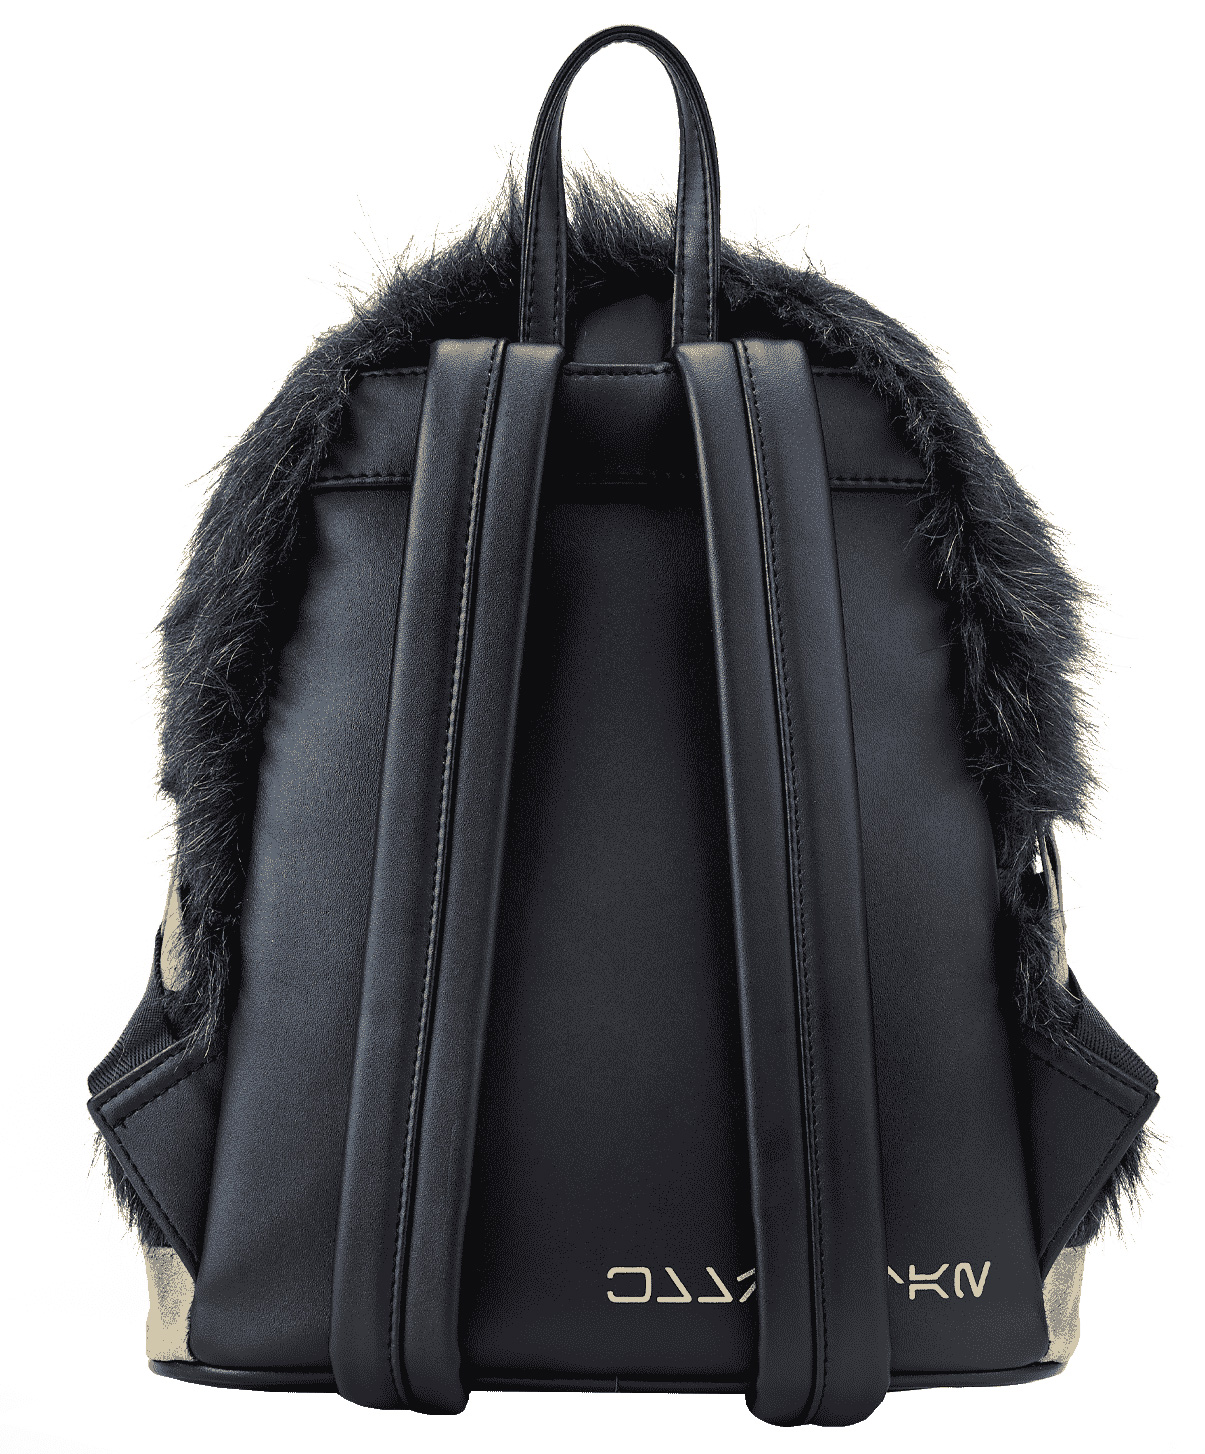 Wookie Krrsantan Mini-Backpack with Black Fur (Star Wars Book of Boba Fett)